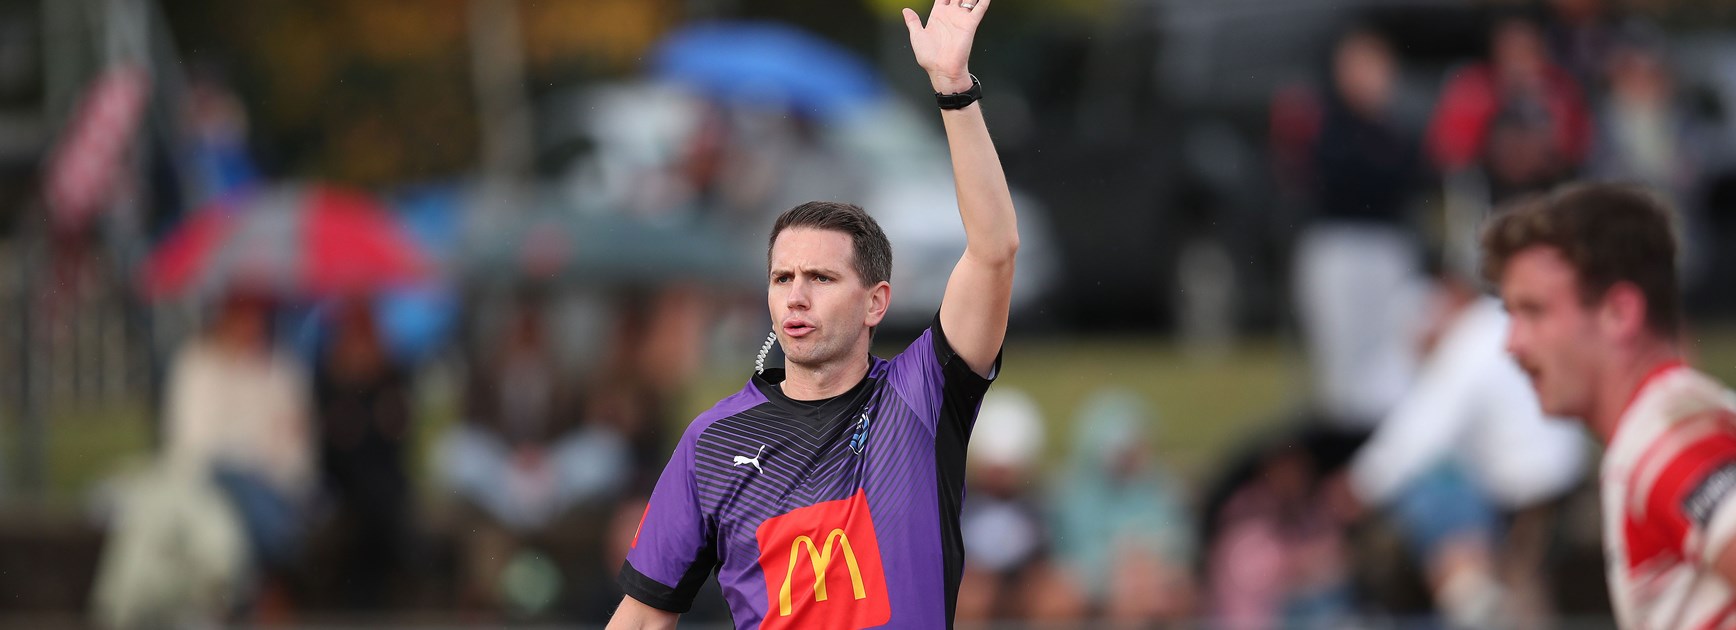 NSWRL referee makes NRL debut